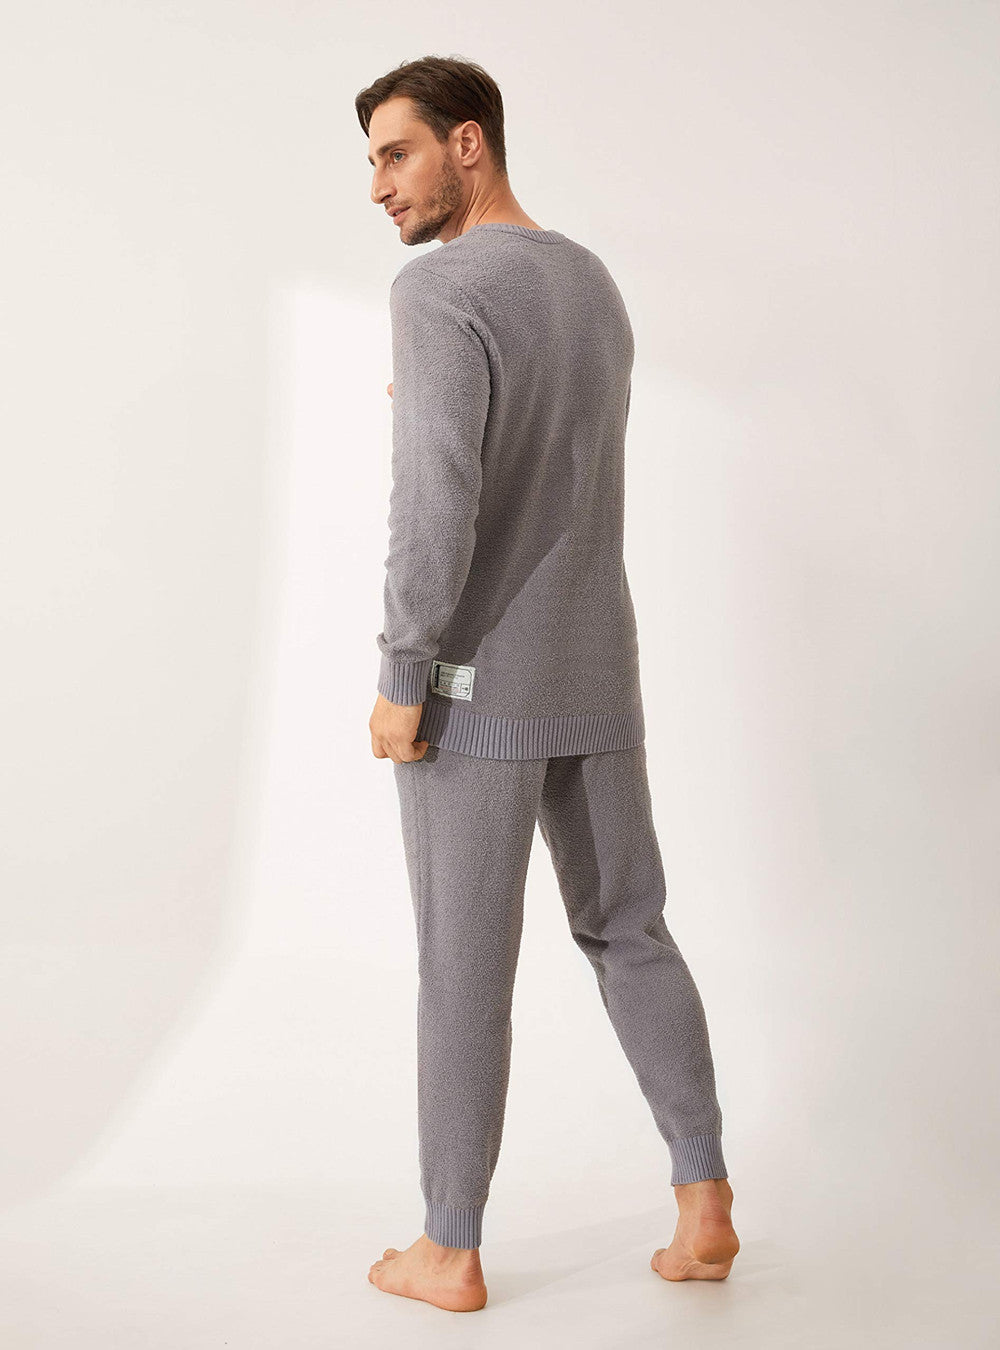 David Archy Pajama Set Plush Fleece Warm Cozy Men's Nightwear Set Comfort  Pyjamas For Men